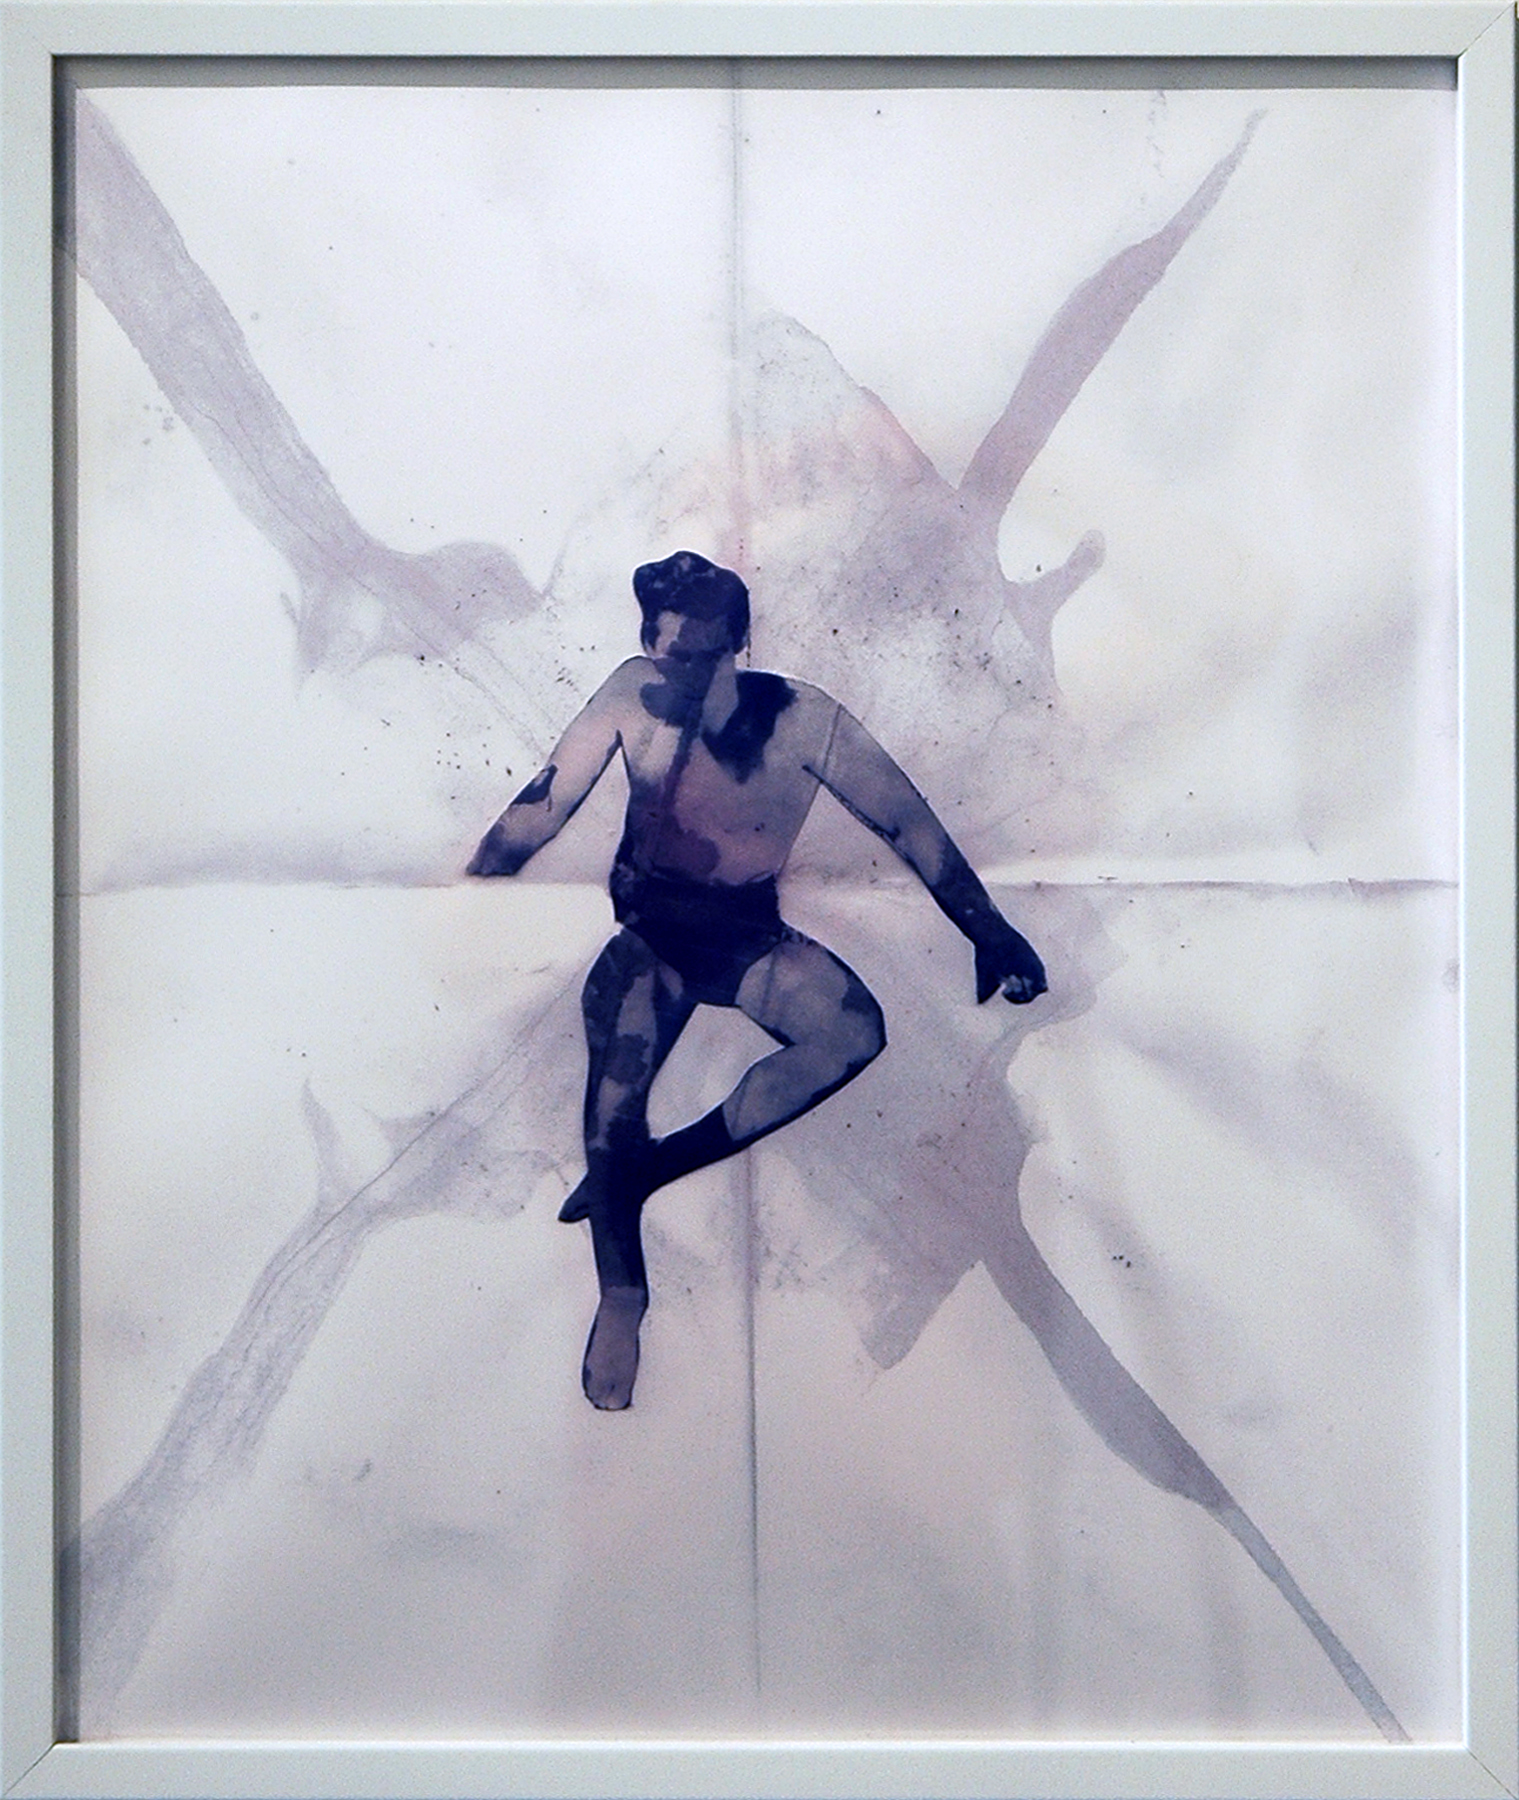   DERIC CARNER   Gordon II , digital c-print, with artist frame, 24" x 20", 2012 